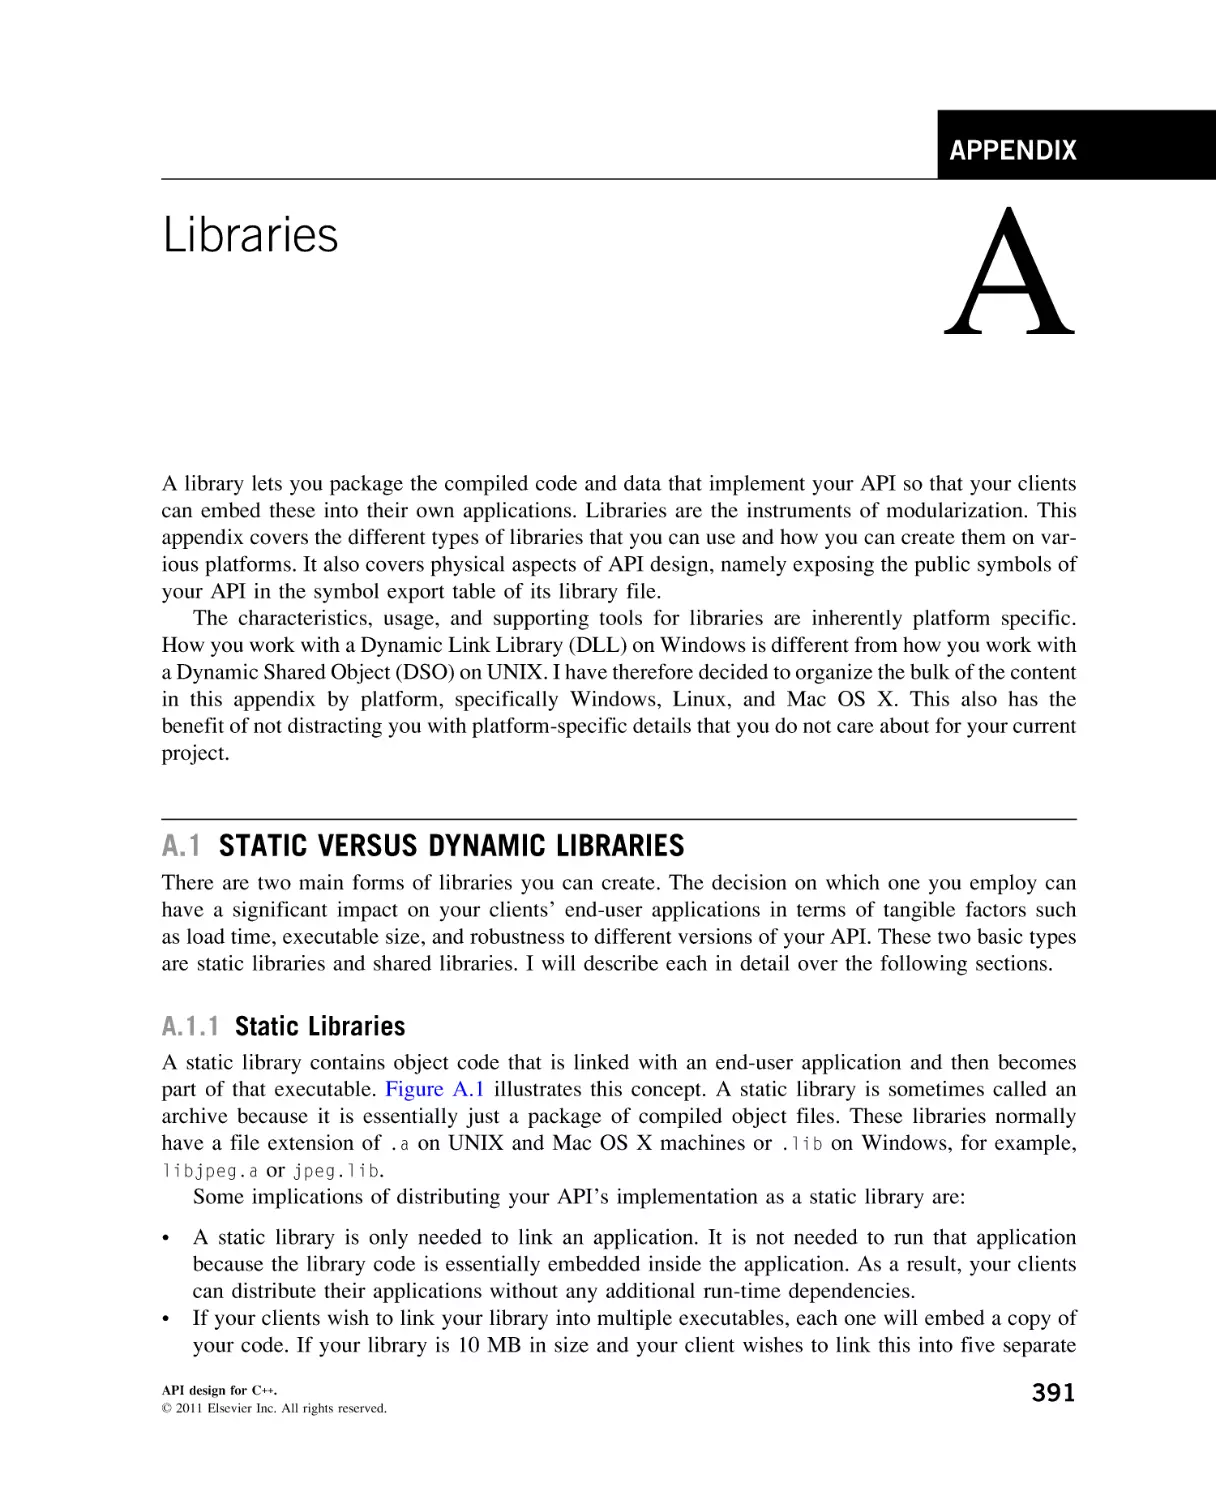 Libraries
Static Versus Dynamic Libraries